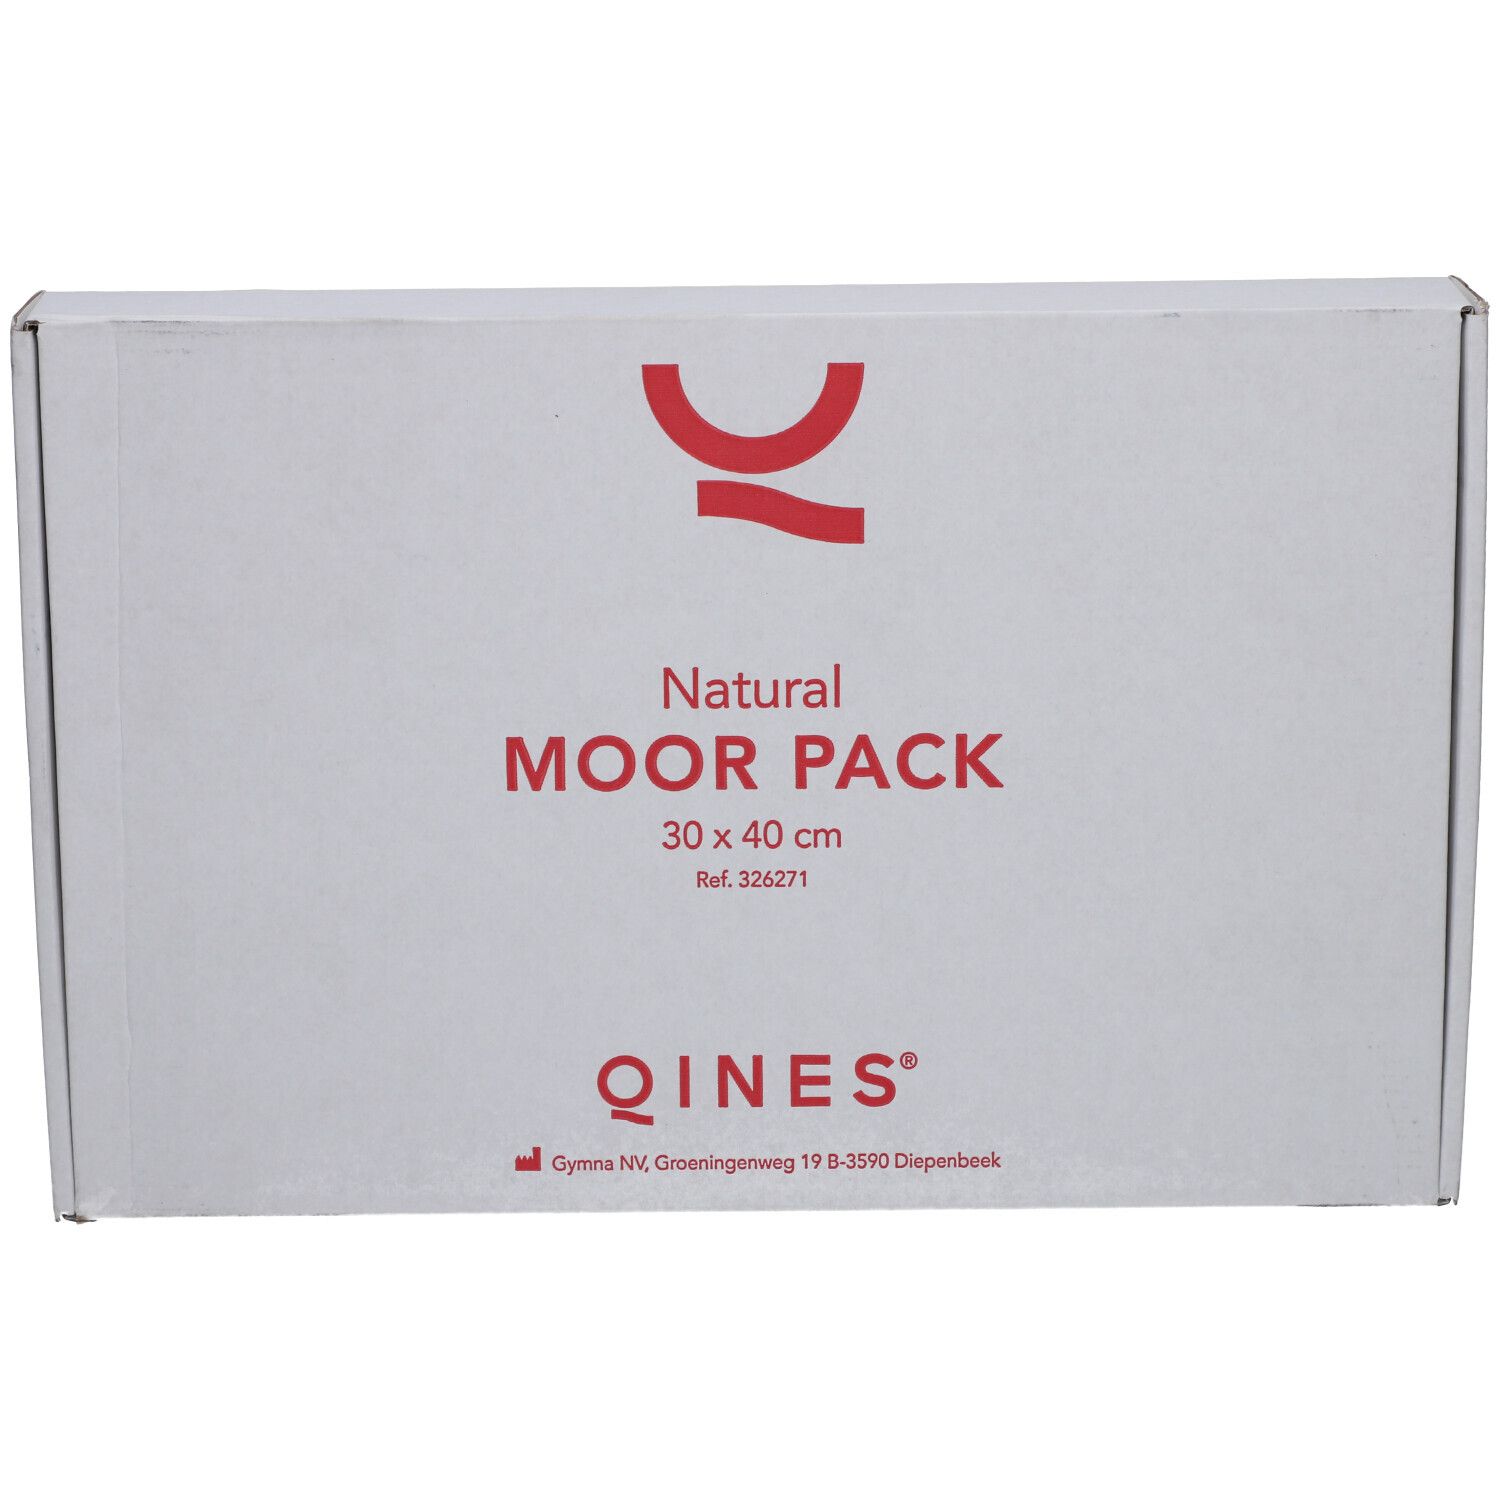 Qines® Natural Moor Pack 30 x 40 cm